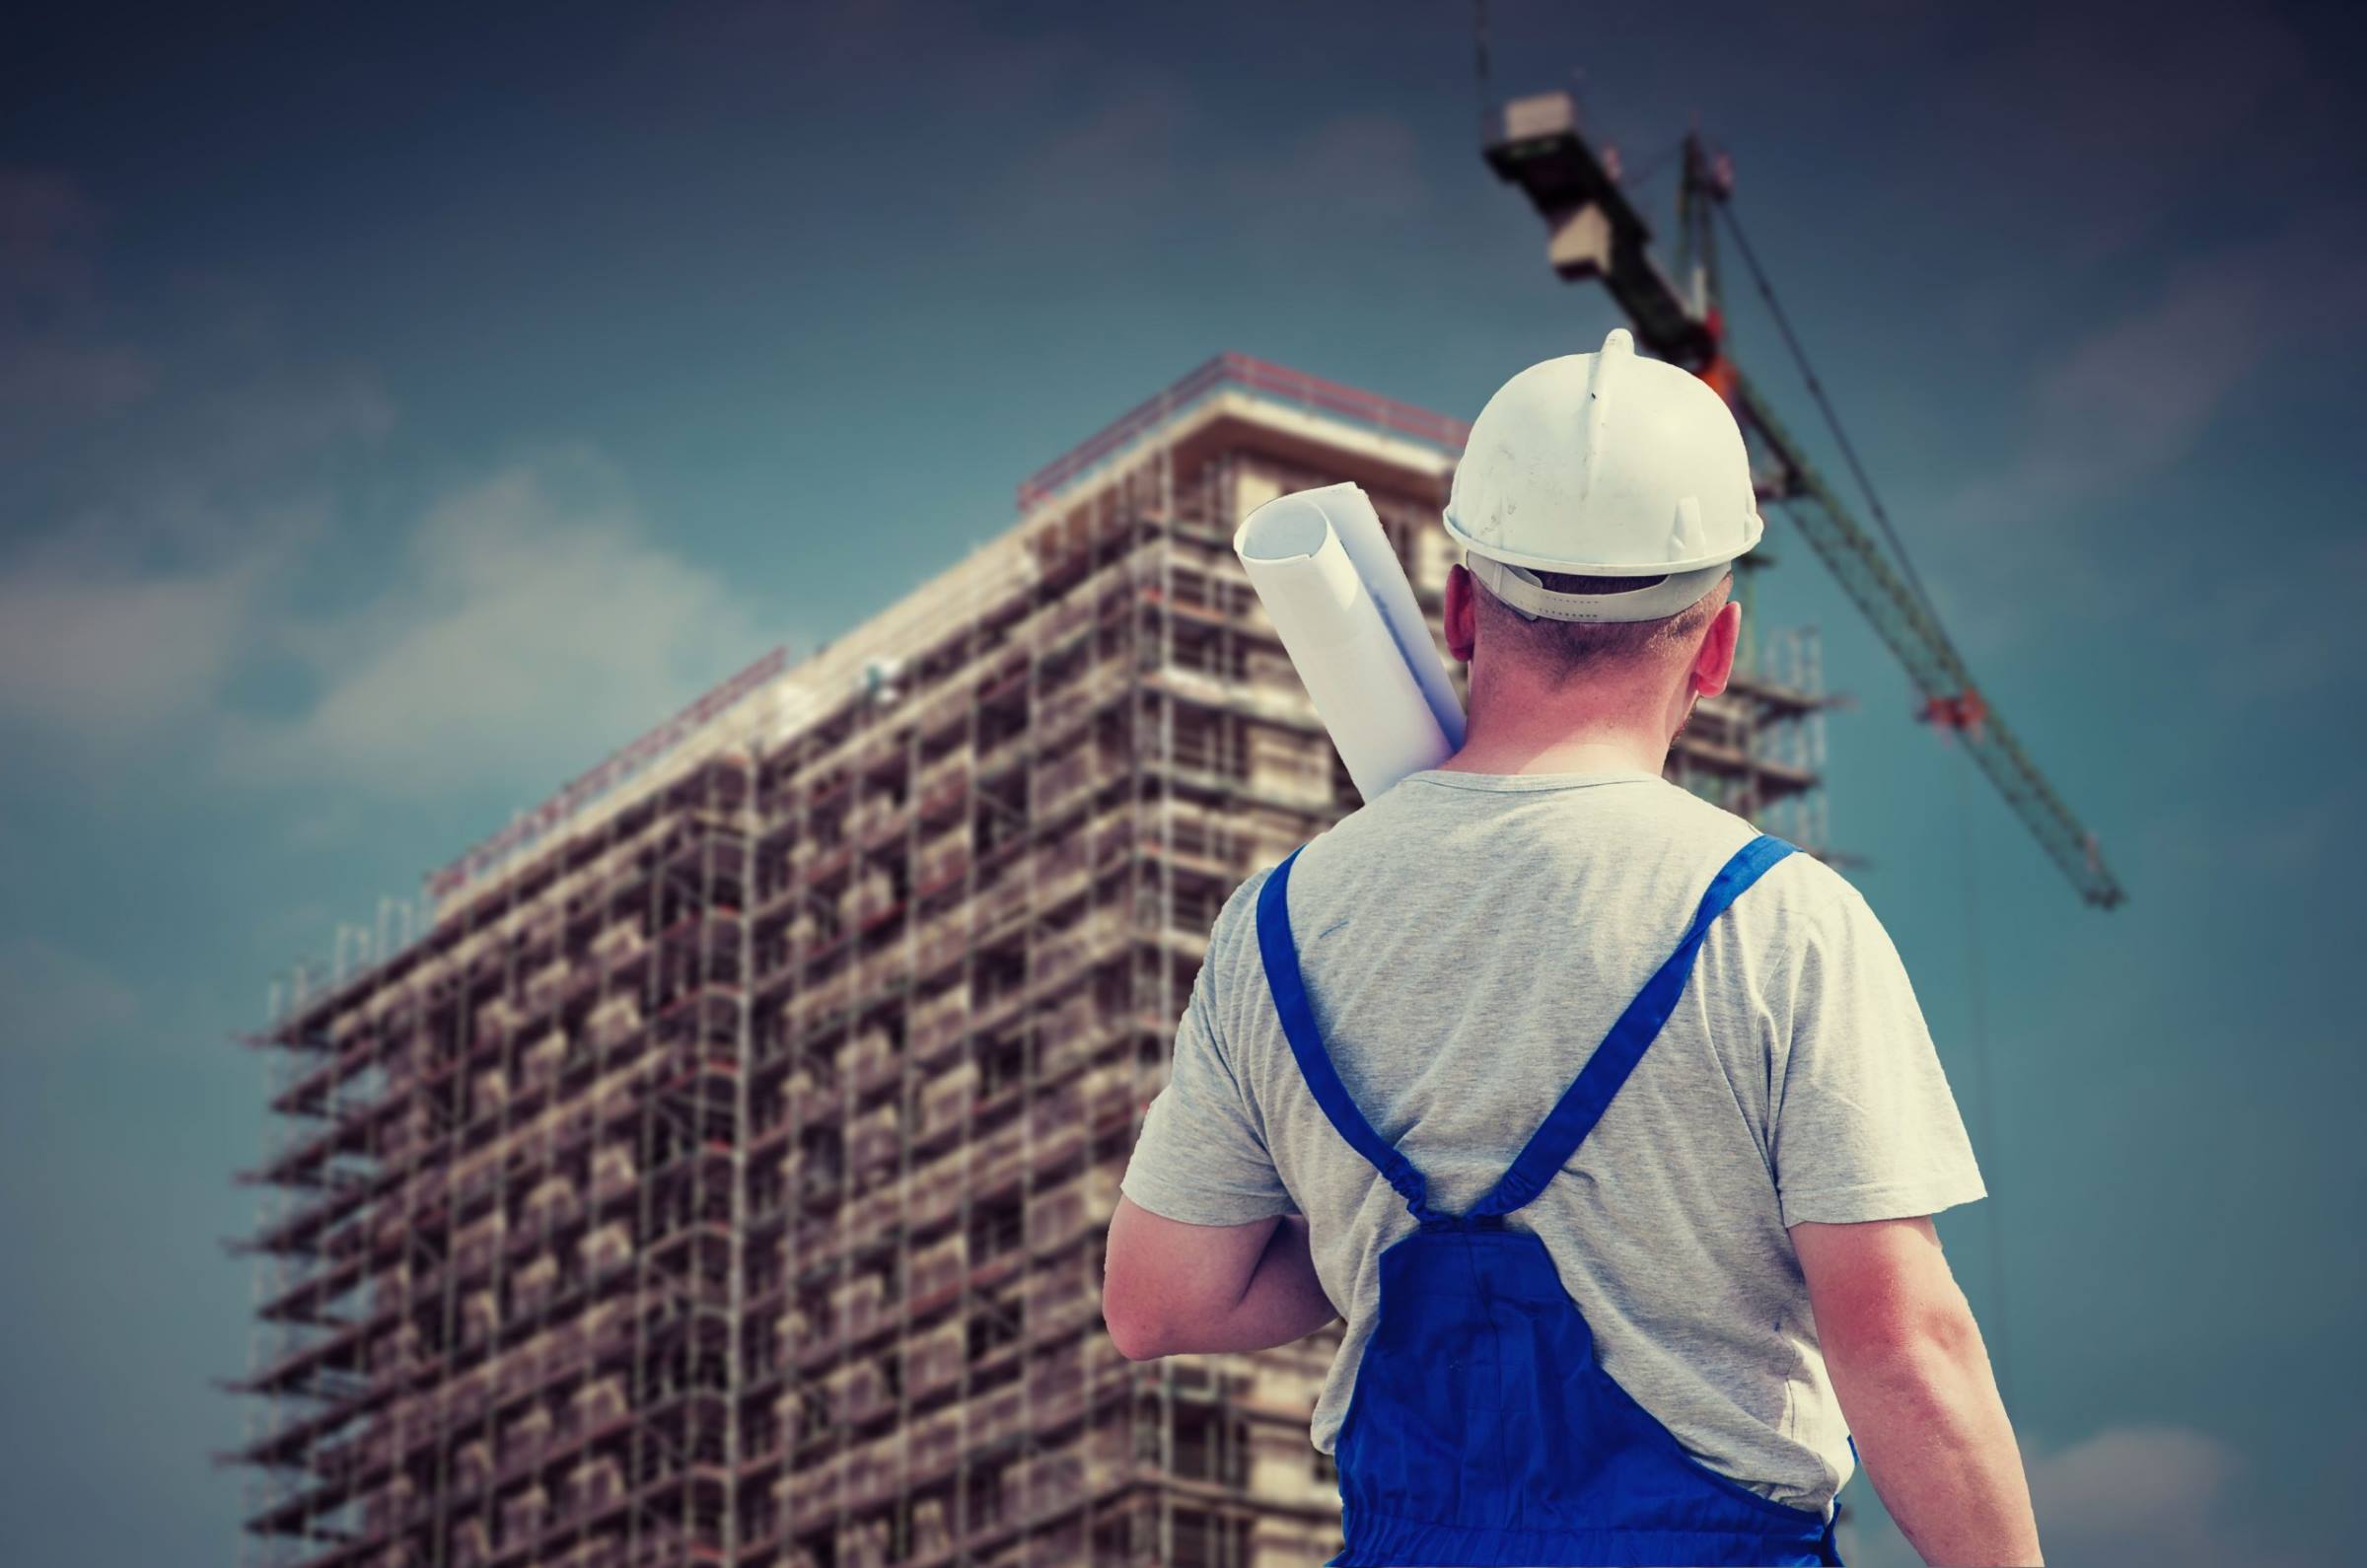 Free Worker builder plans crane high rise - Image